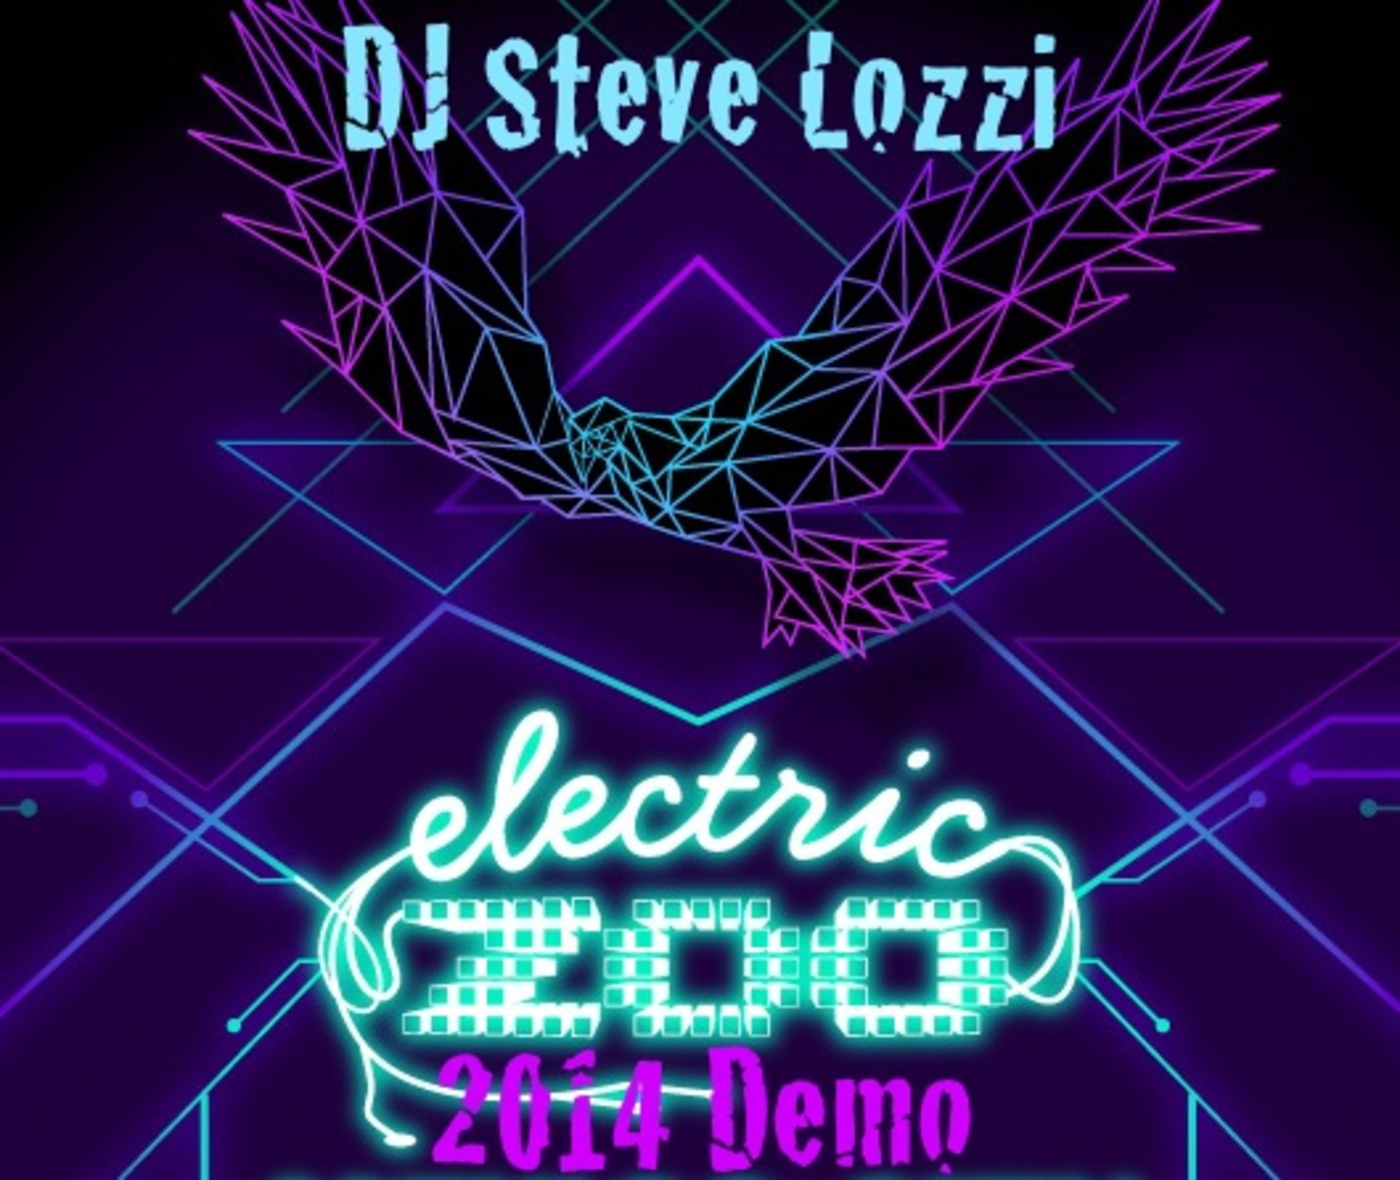 DJ Steve Lozzi - Electric Zoo 2014 Demo